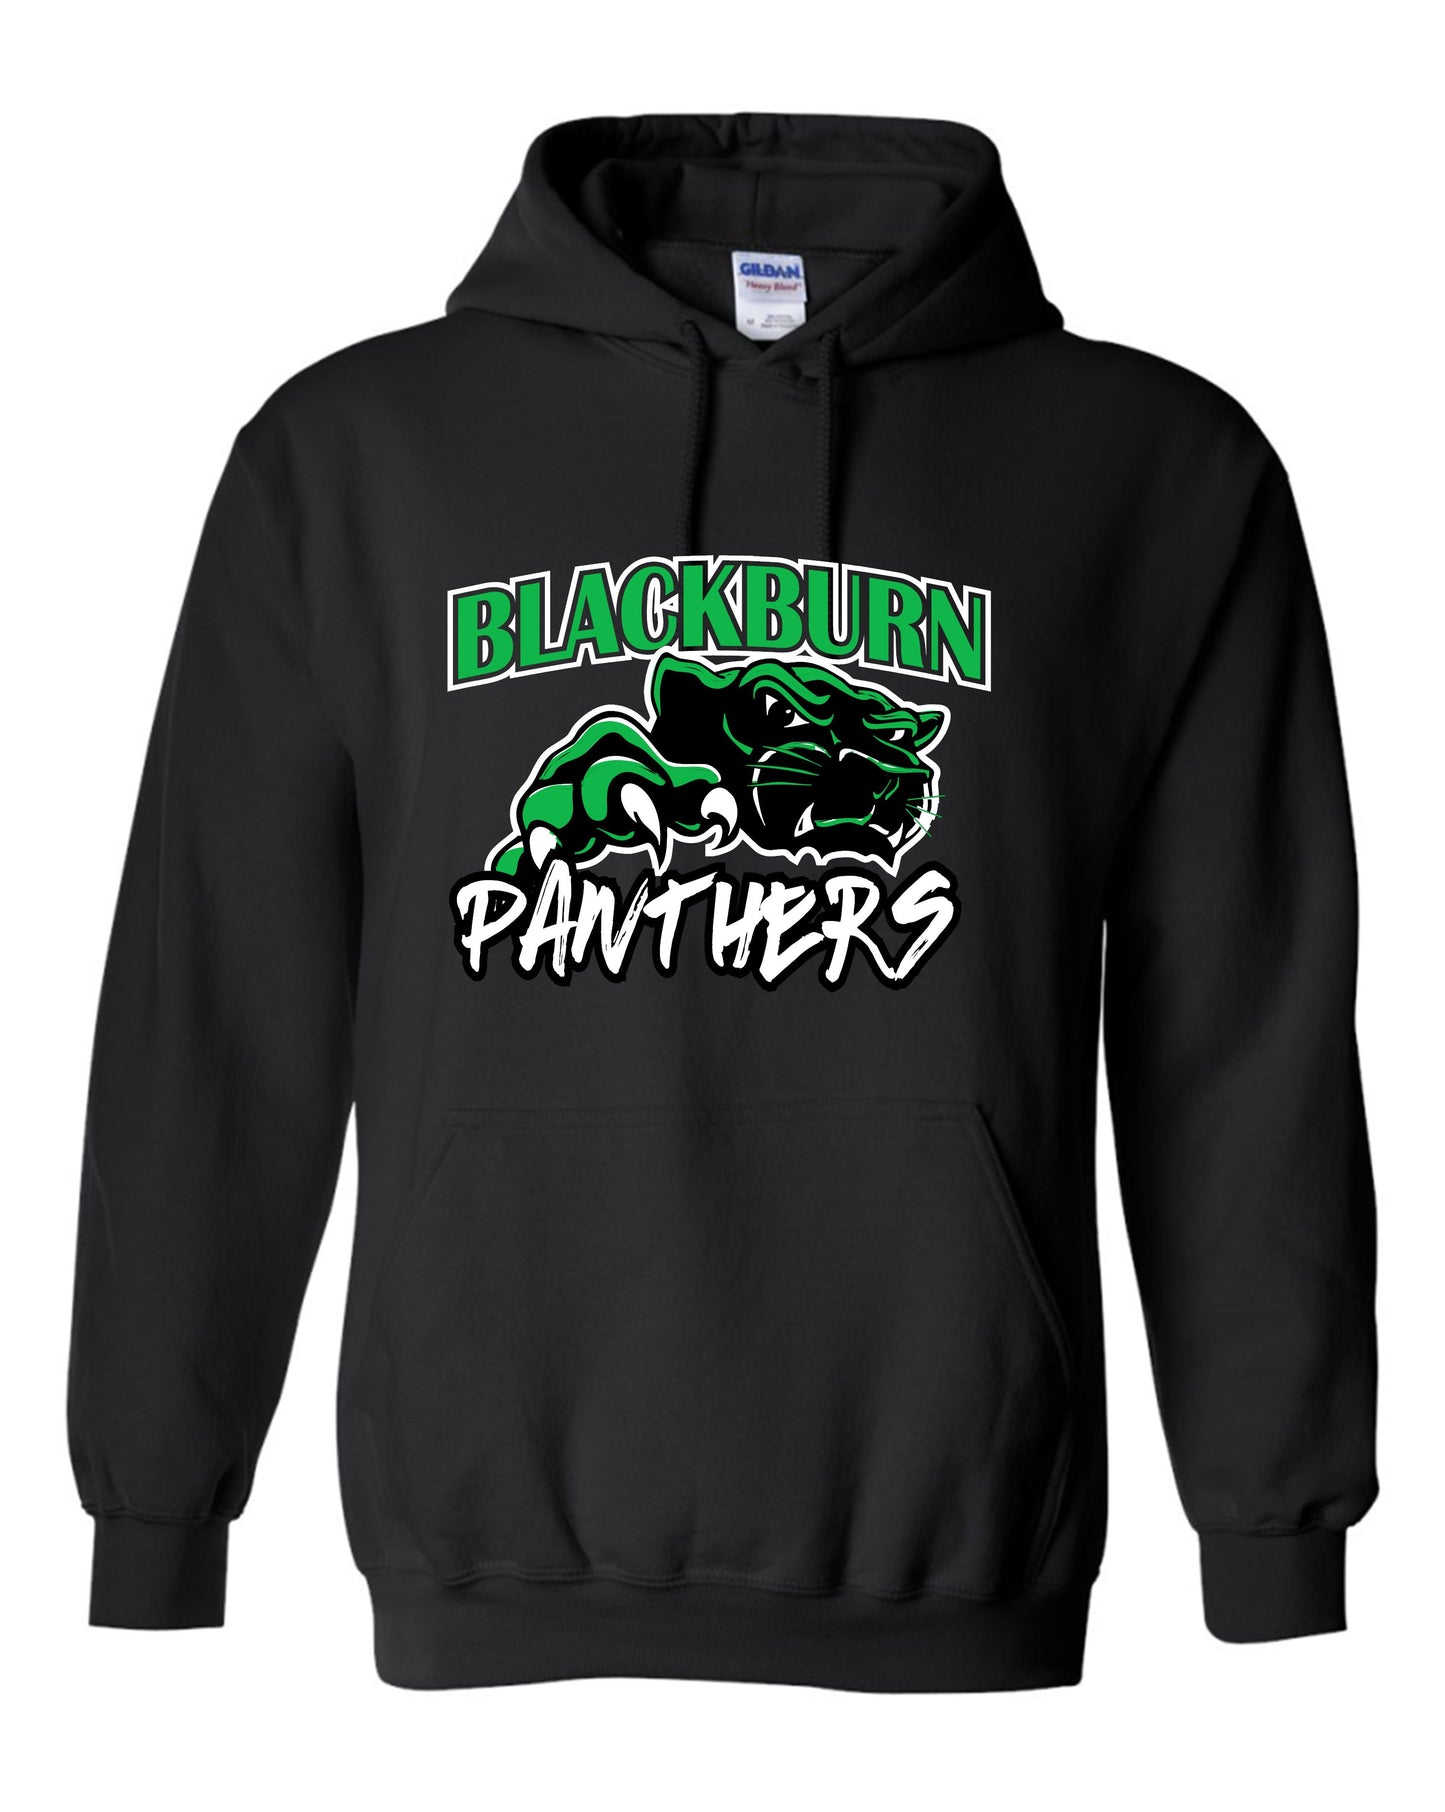 Panthers Hooded Sweatshirt